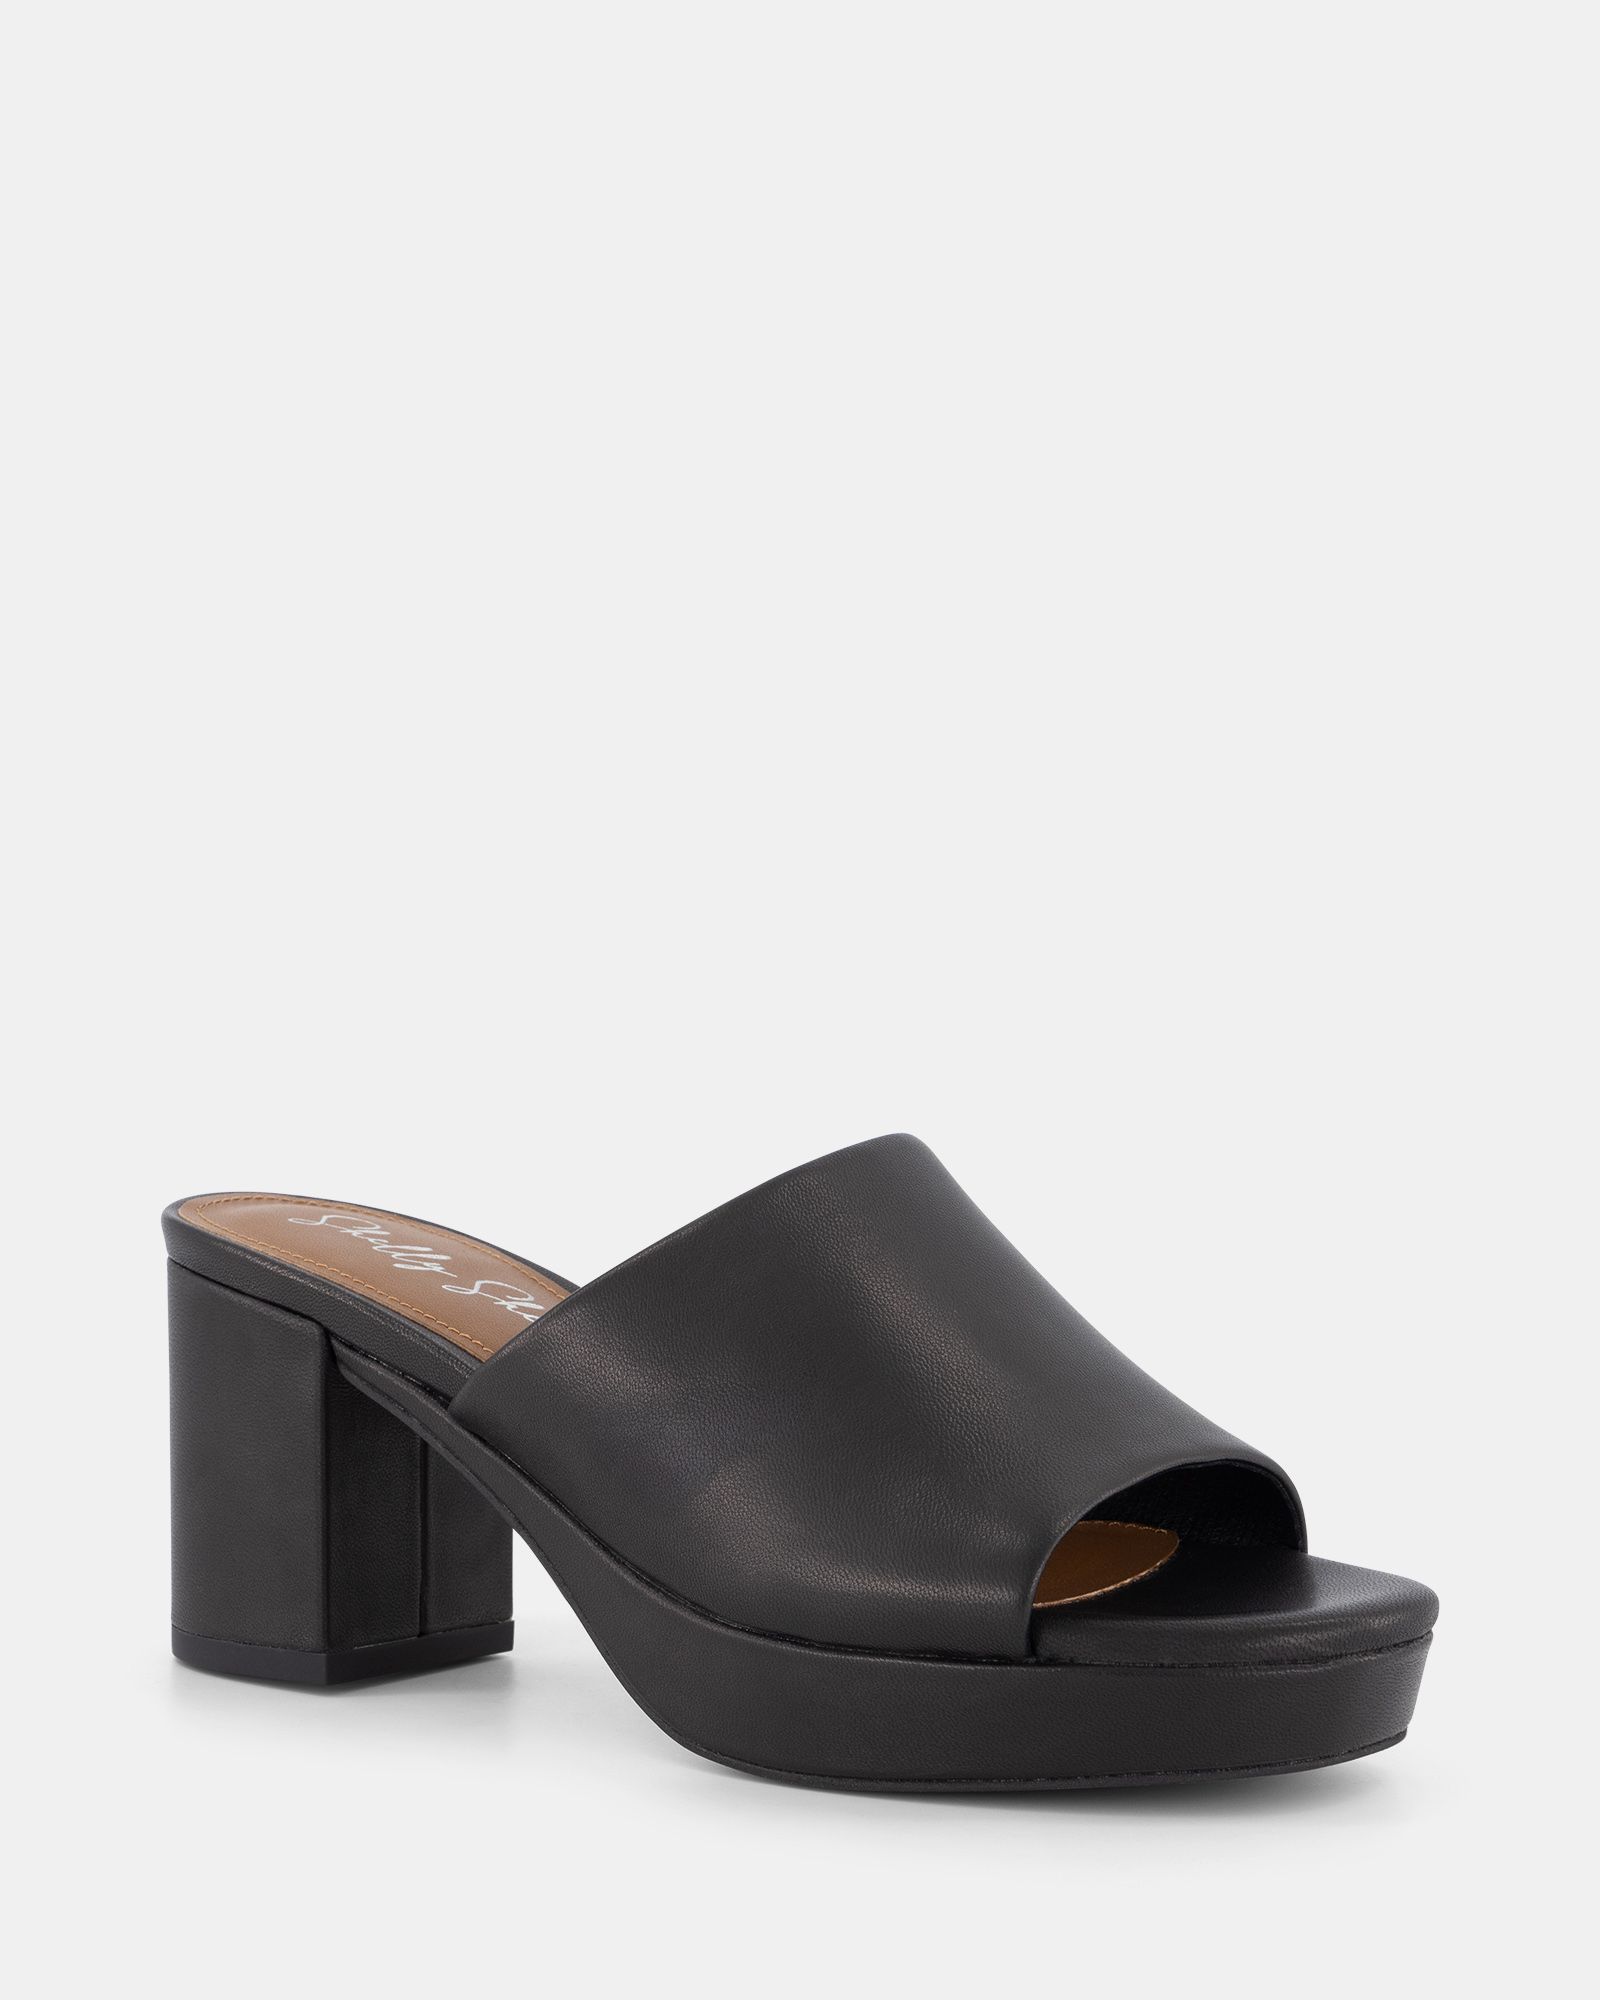 Buy MCKENNA Black heels Online at Shoe Connection